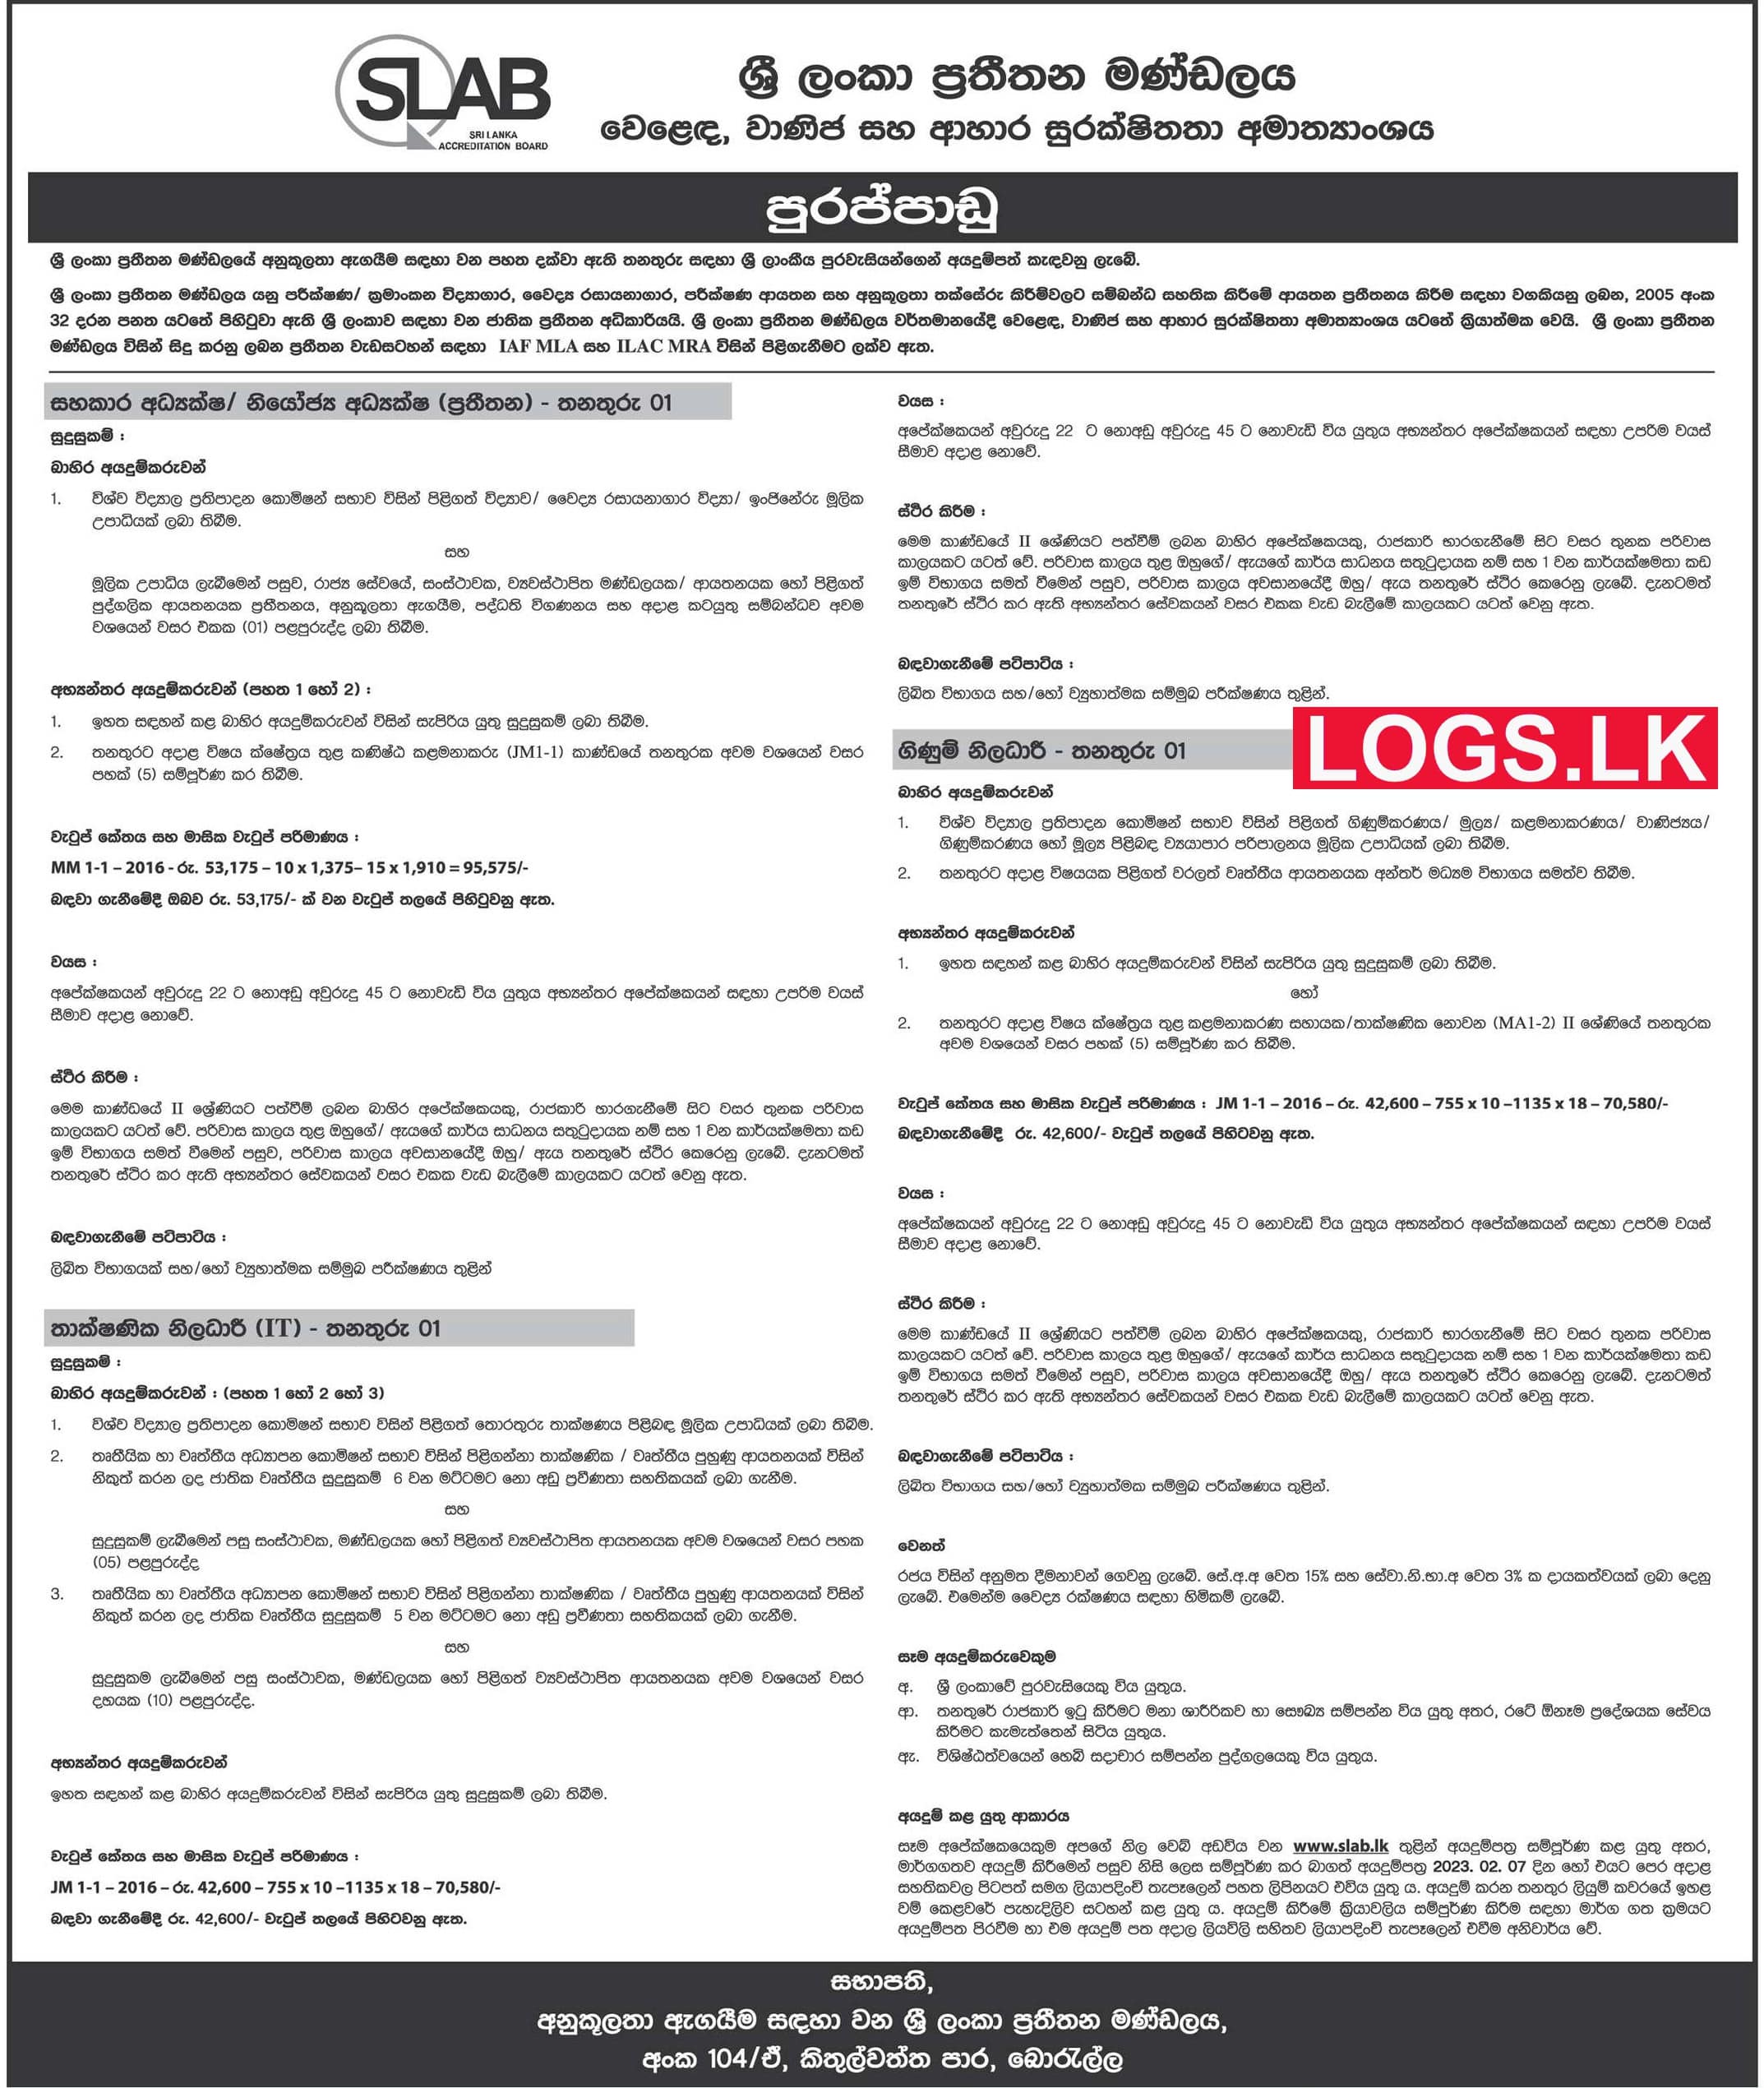 Sri Lanka Accreditation Board Vacancies 2023 Details, Application Form Download